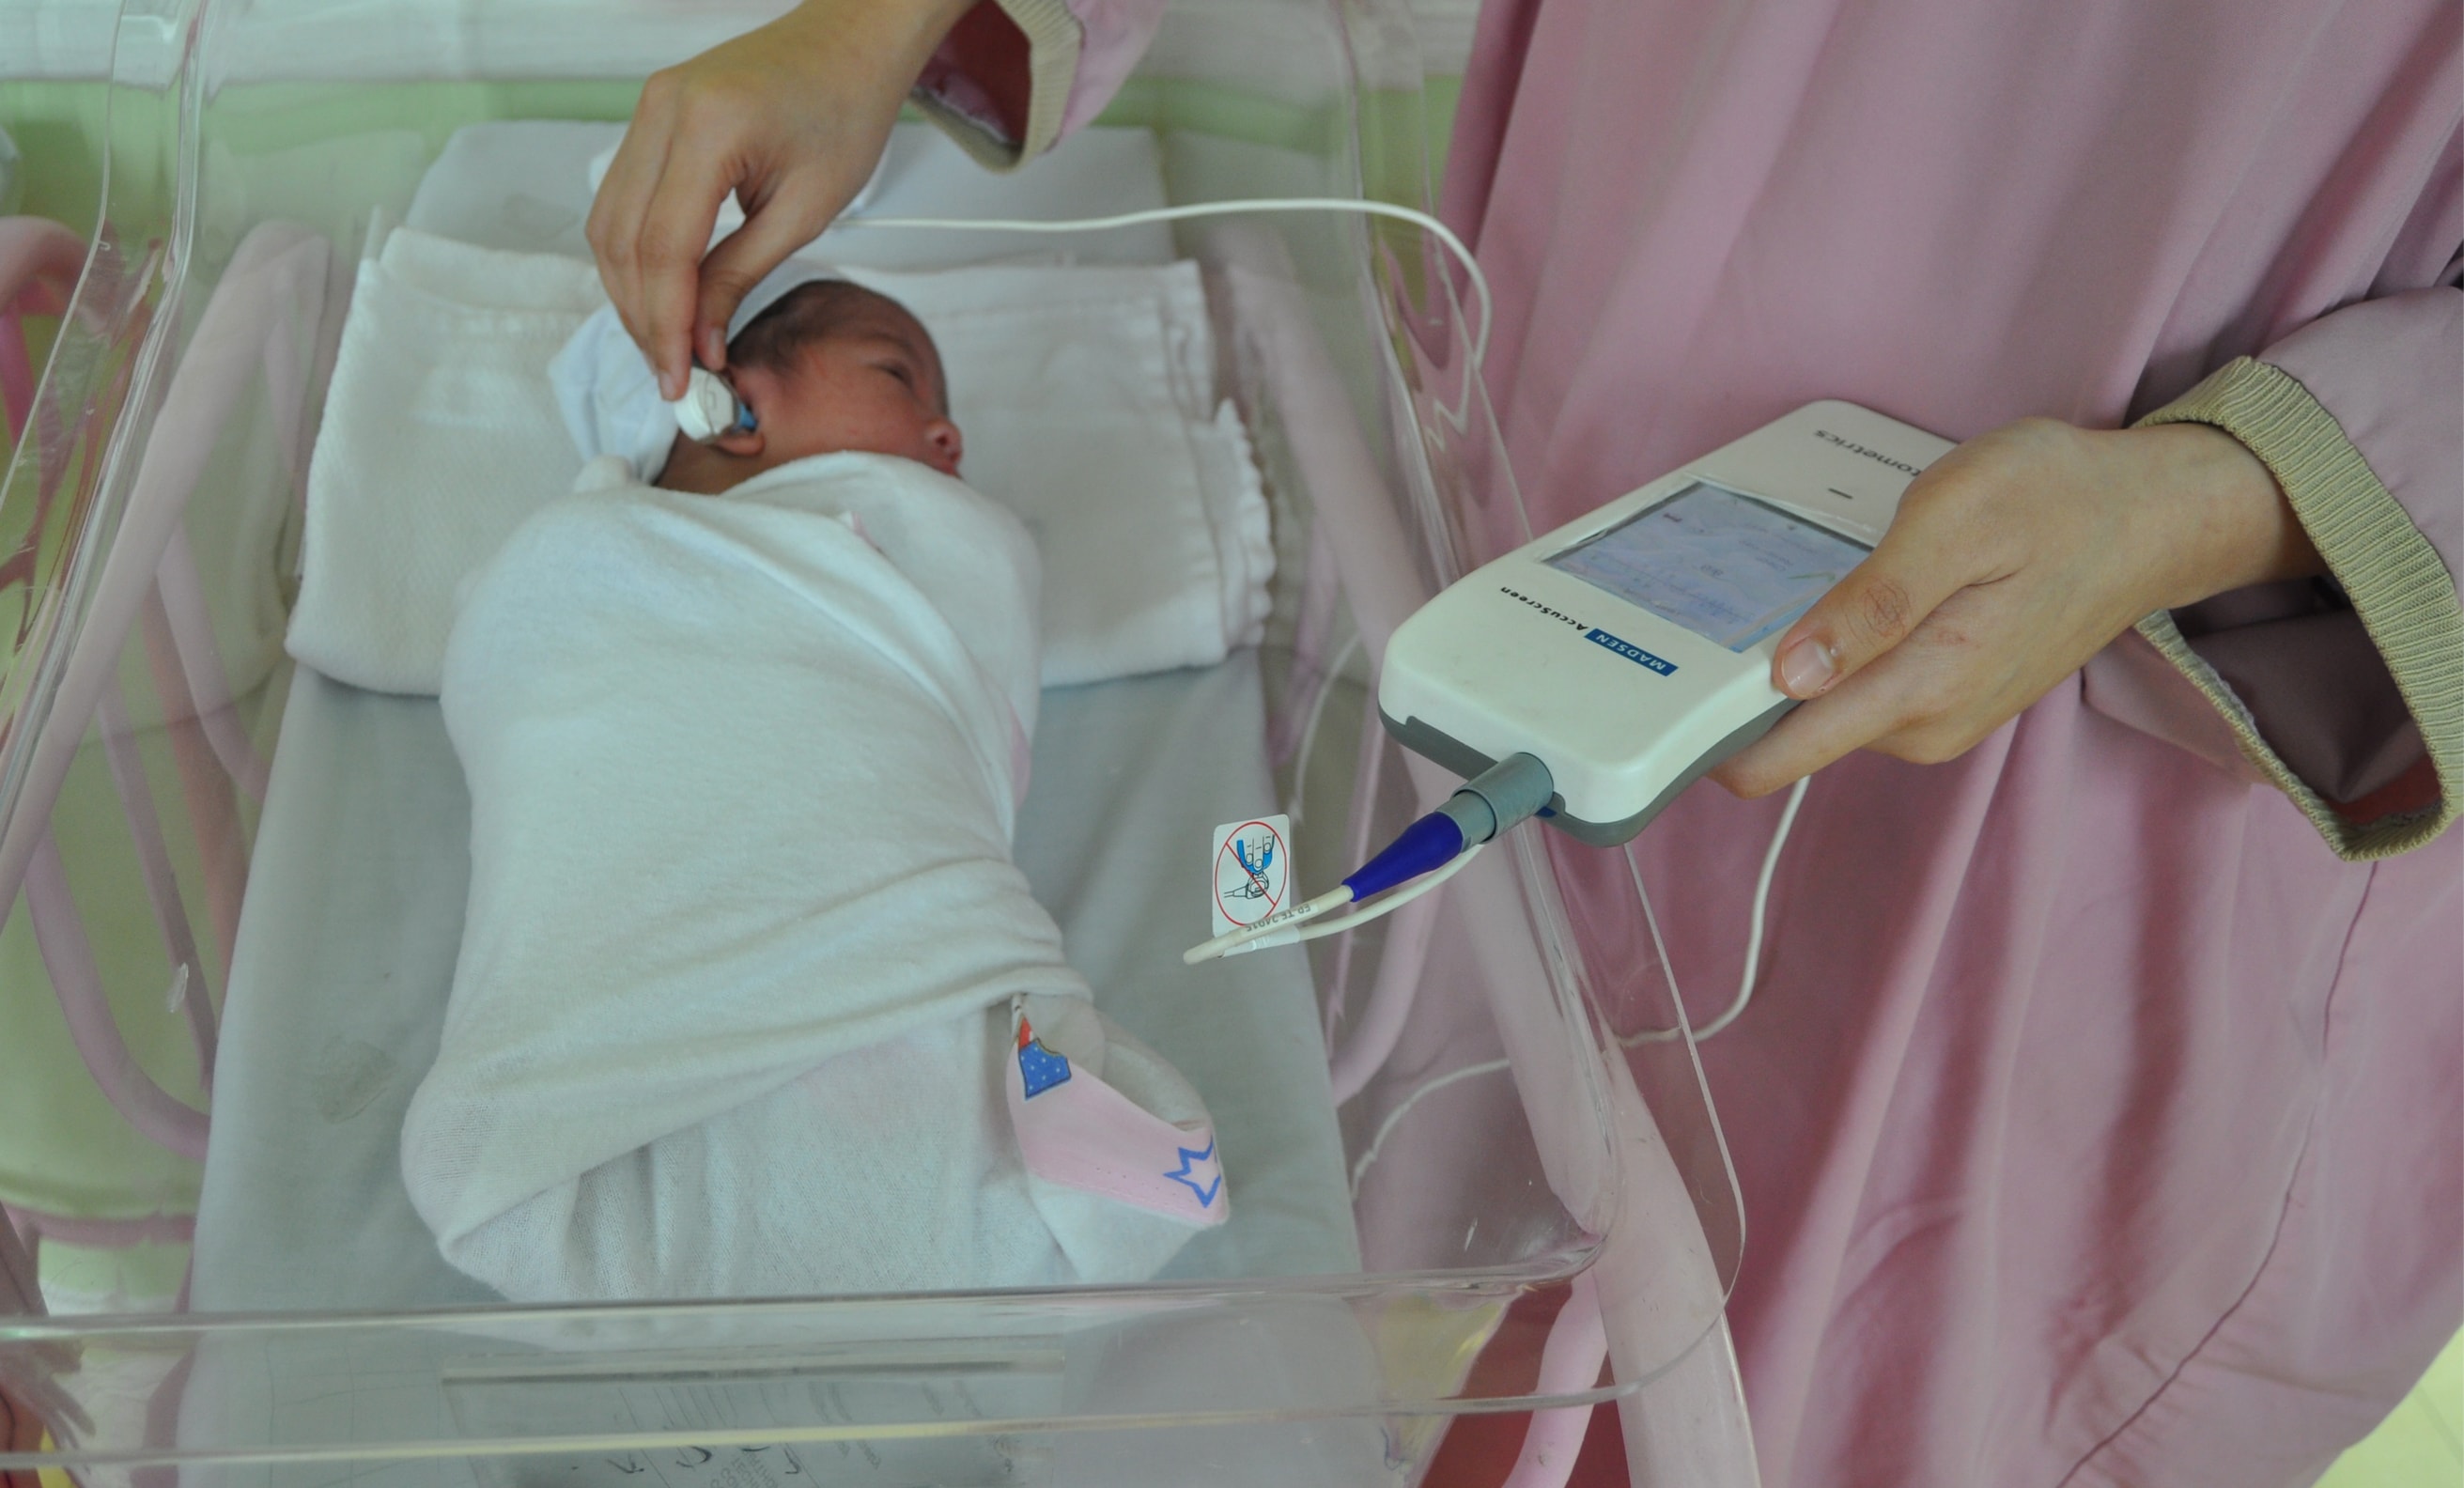 Newborn Hearing Screening Program